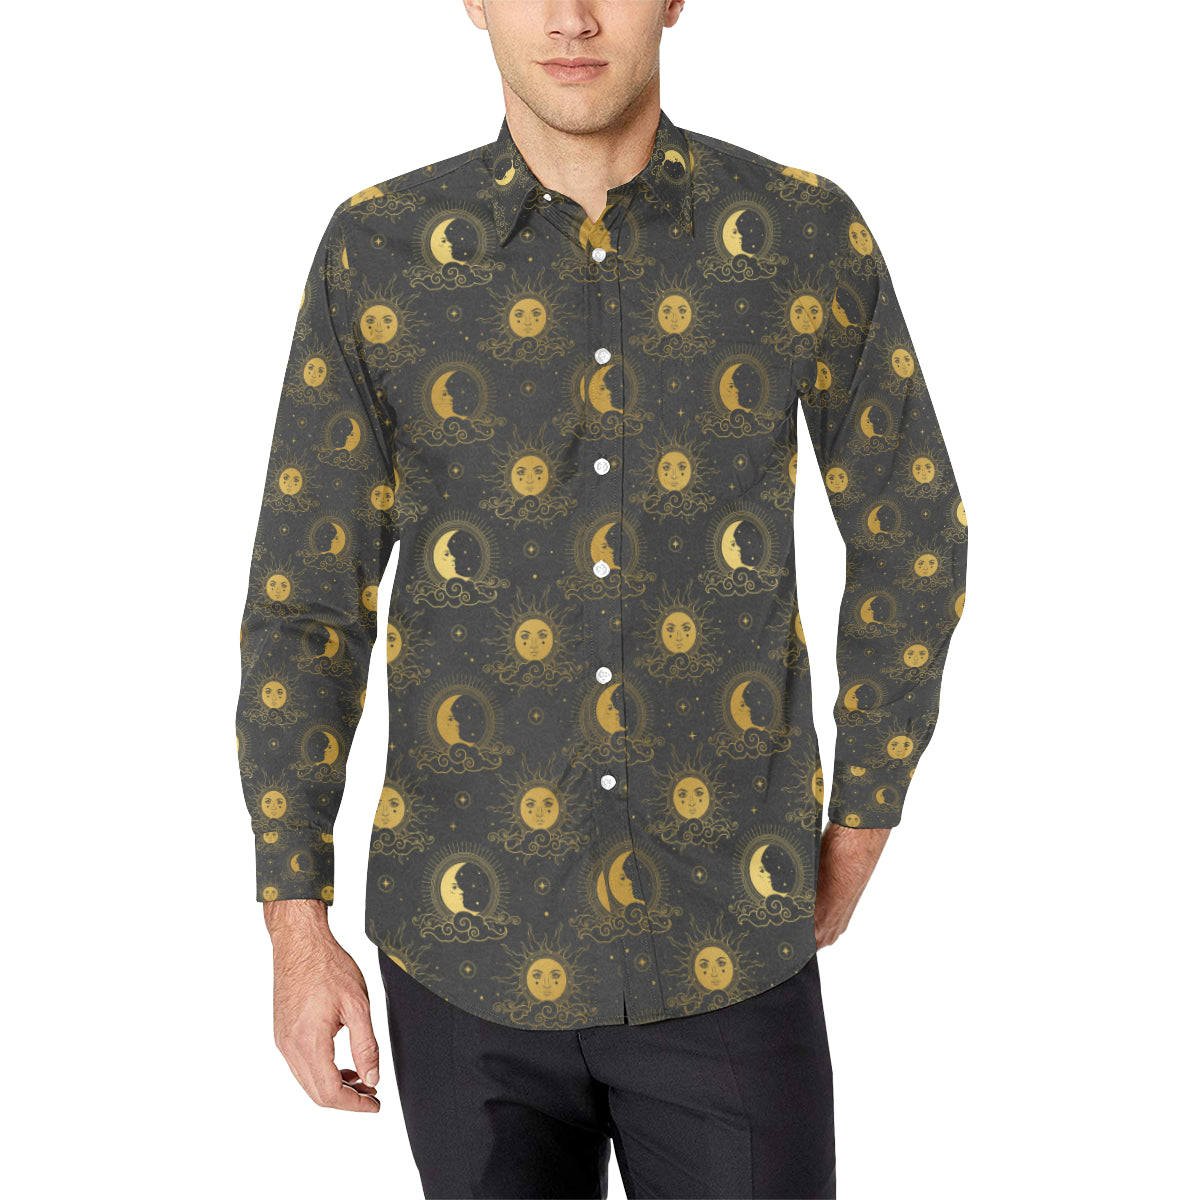 Celestial Moon Sun Pattern Print Design 05 Men's Long Sleeve Shirt